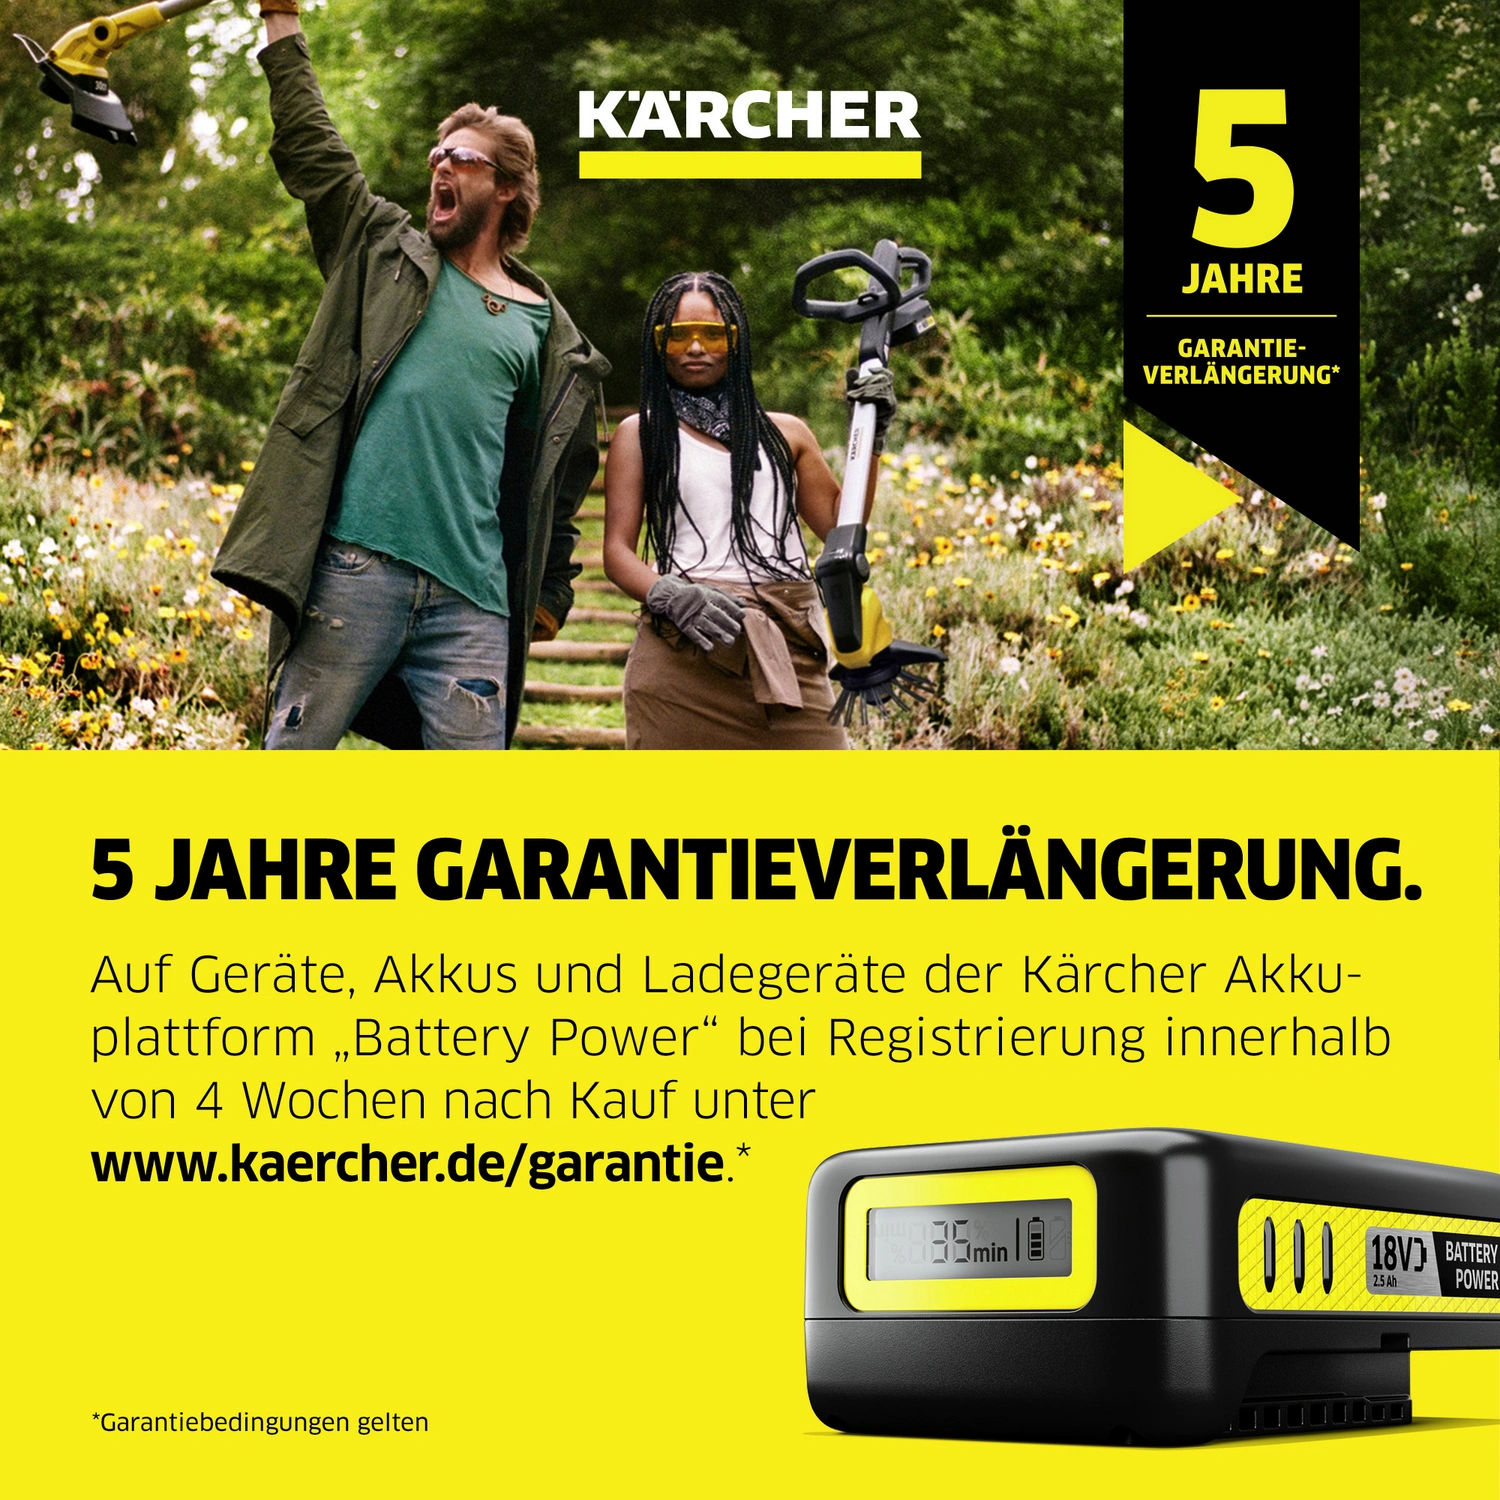 KÄRCHER Akku-Starter Kit V 18 alle für Geräte Akkuplattform der Kärcher